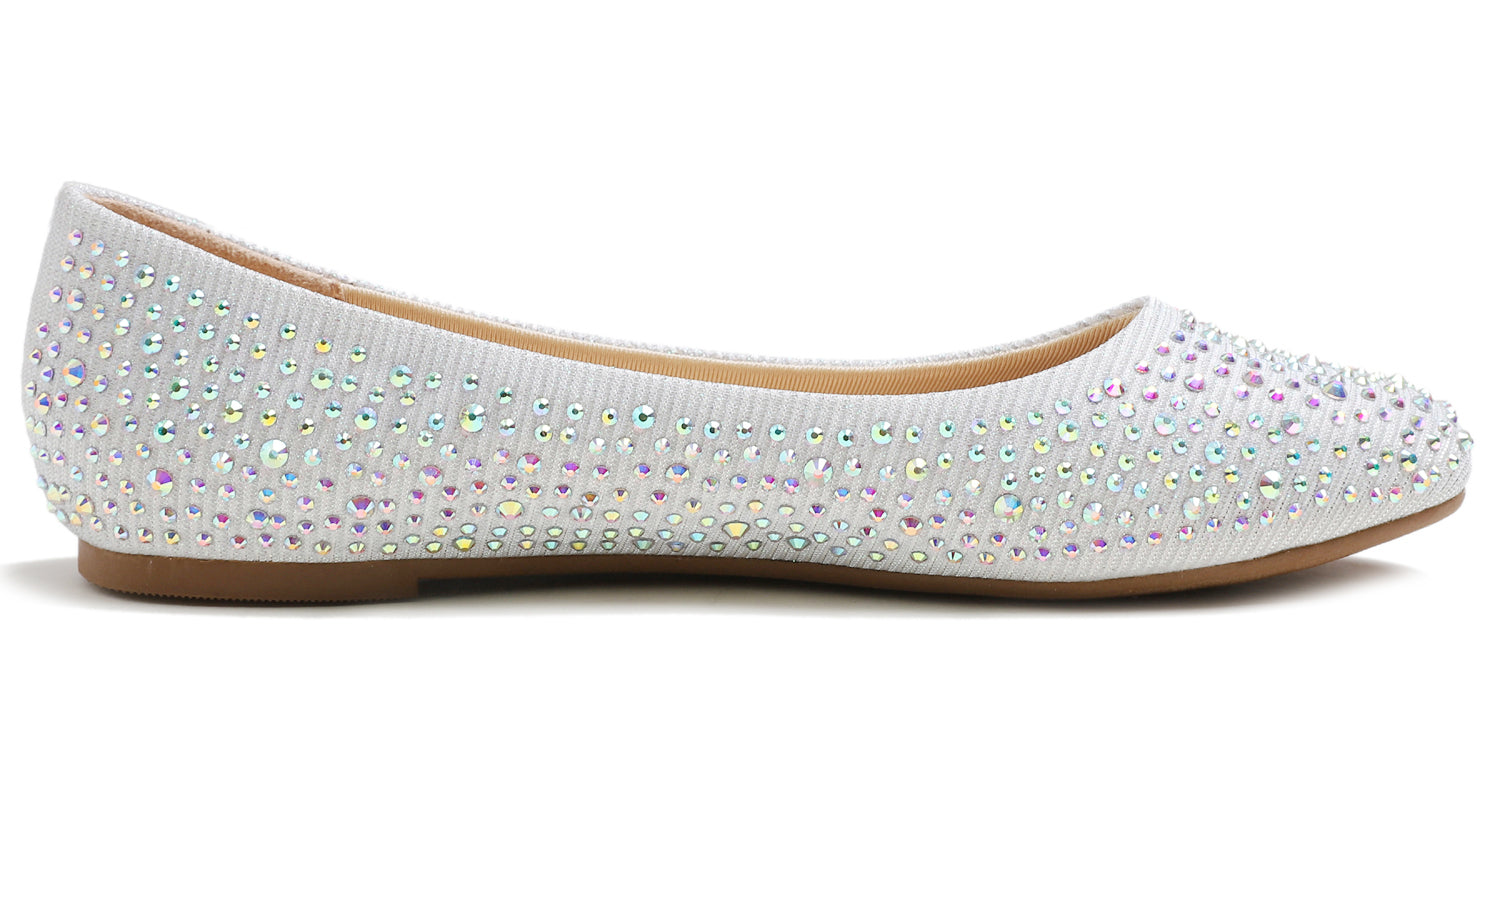 Feversole Women's Rhinestone Flat Shoes Sparkly Embellished Party Wedding Dress Ballets White Lurex